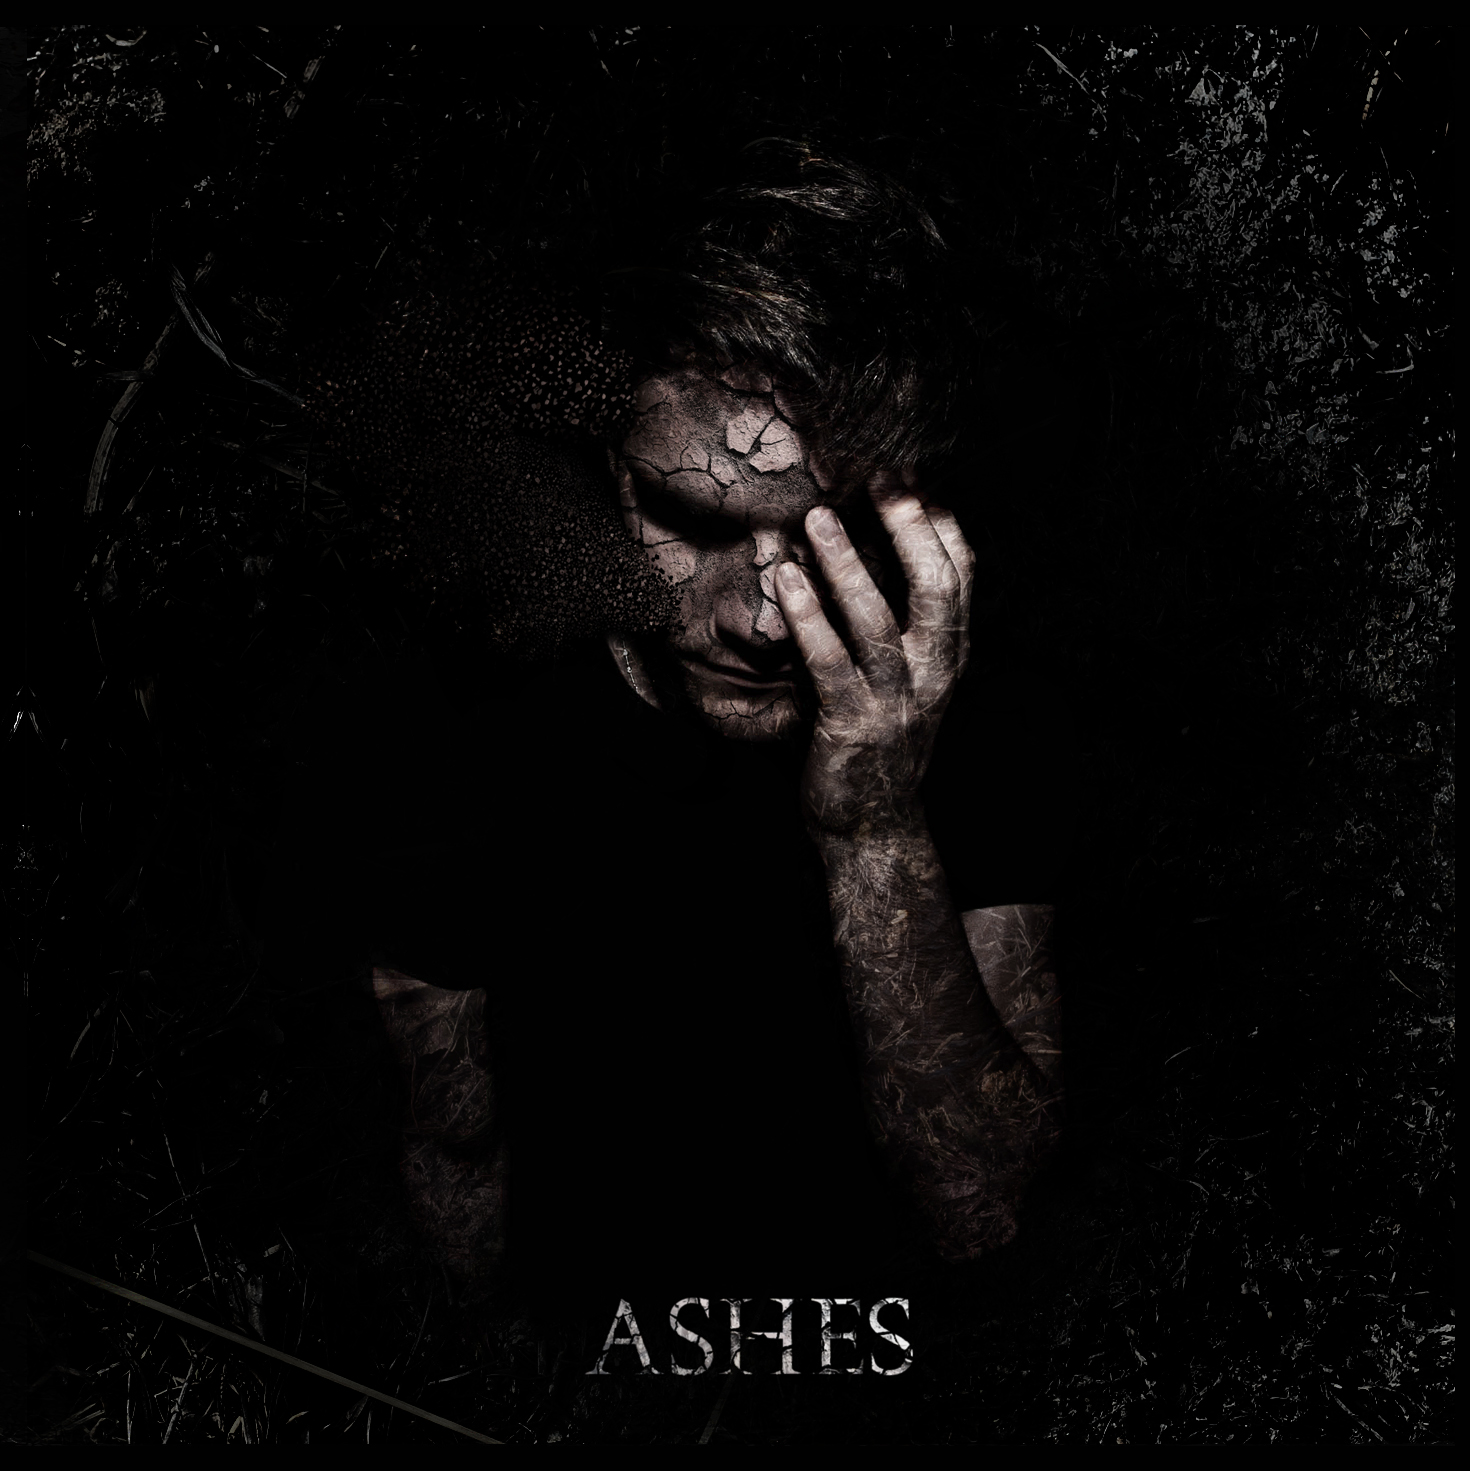 Plugs of Apocalypse - Ashes (2012)